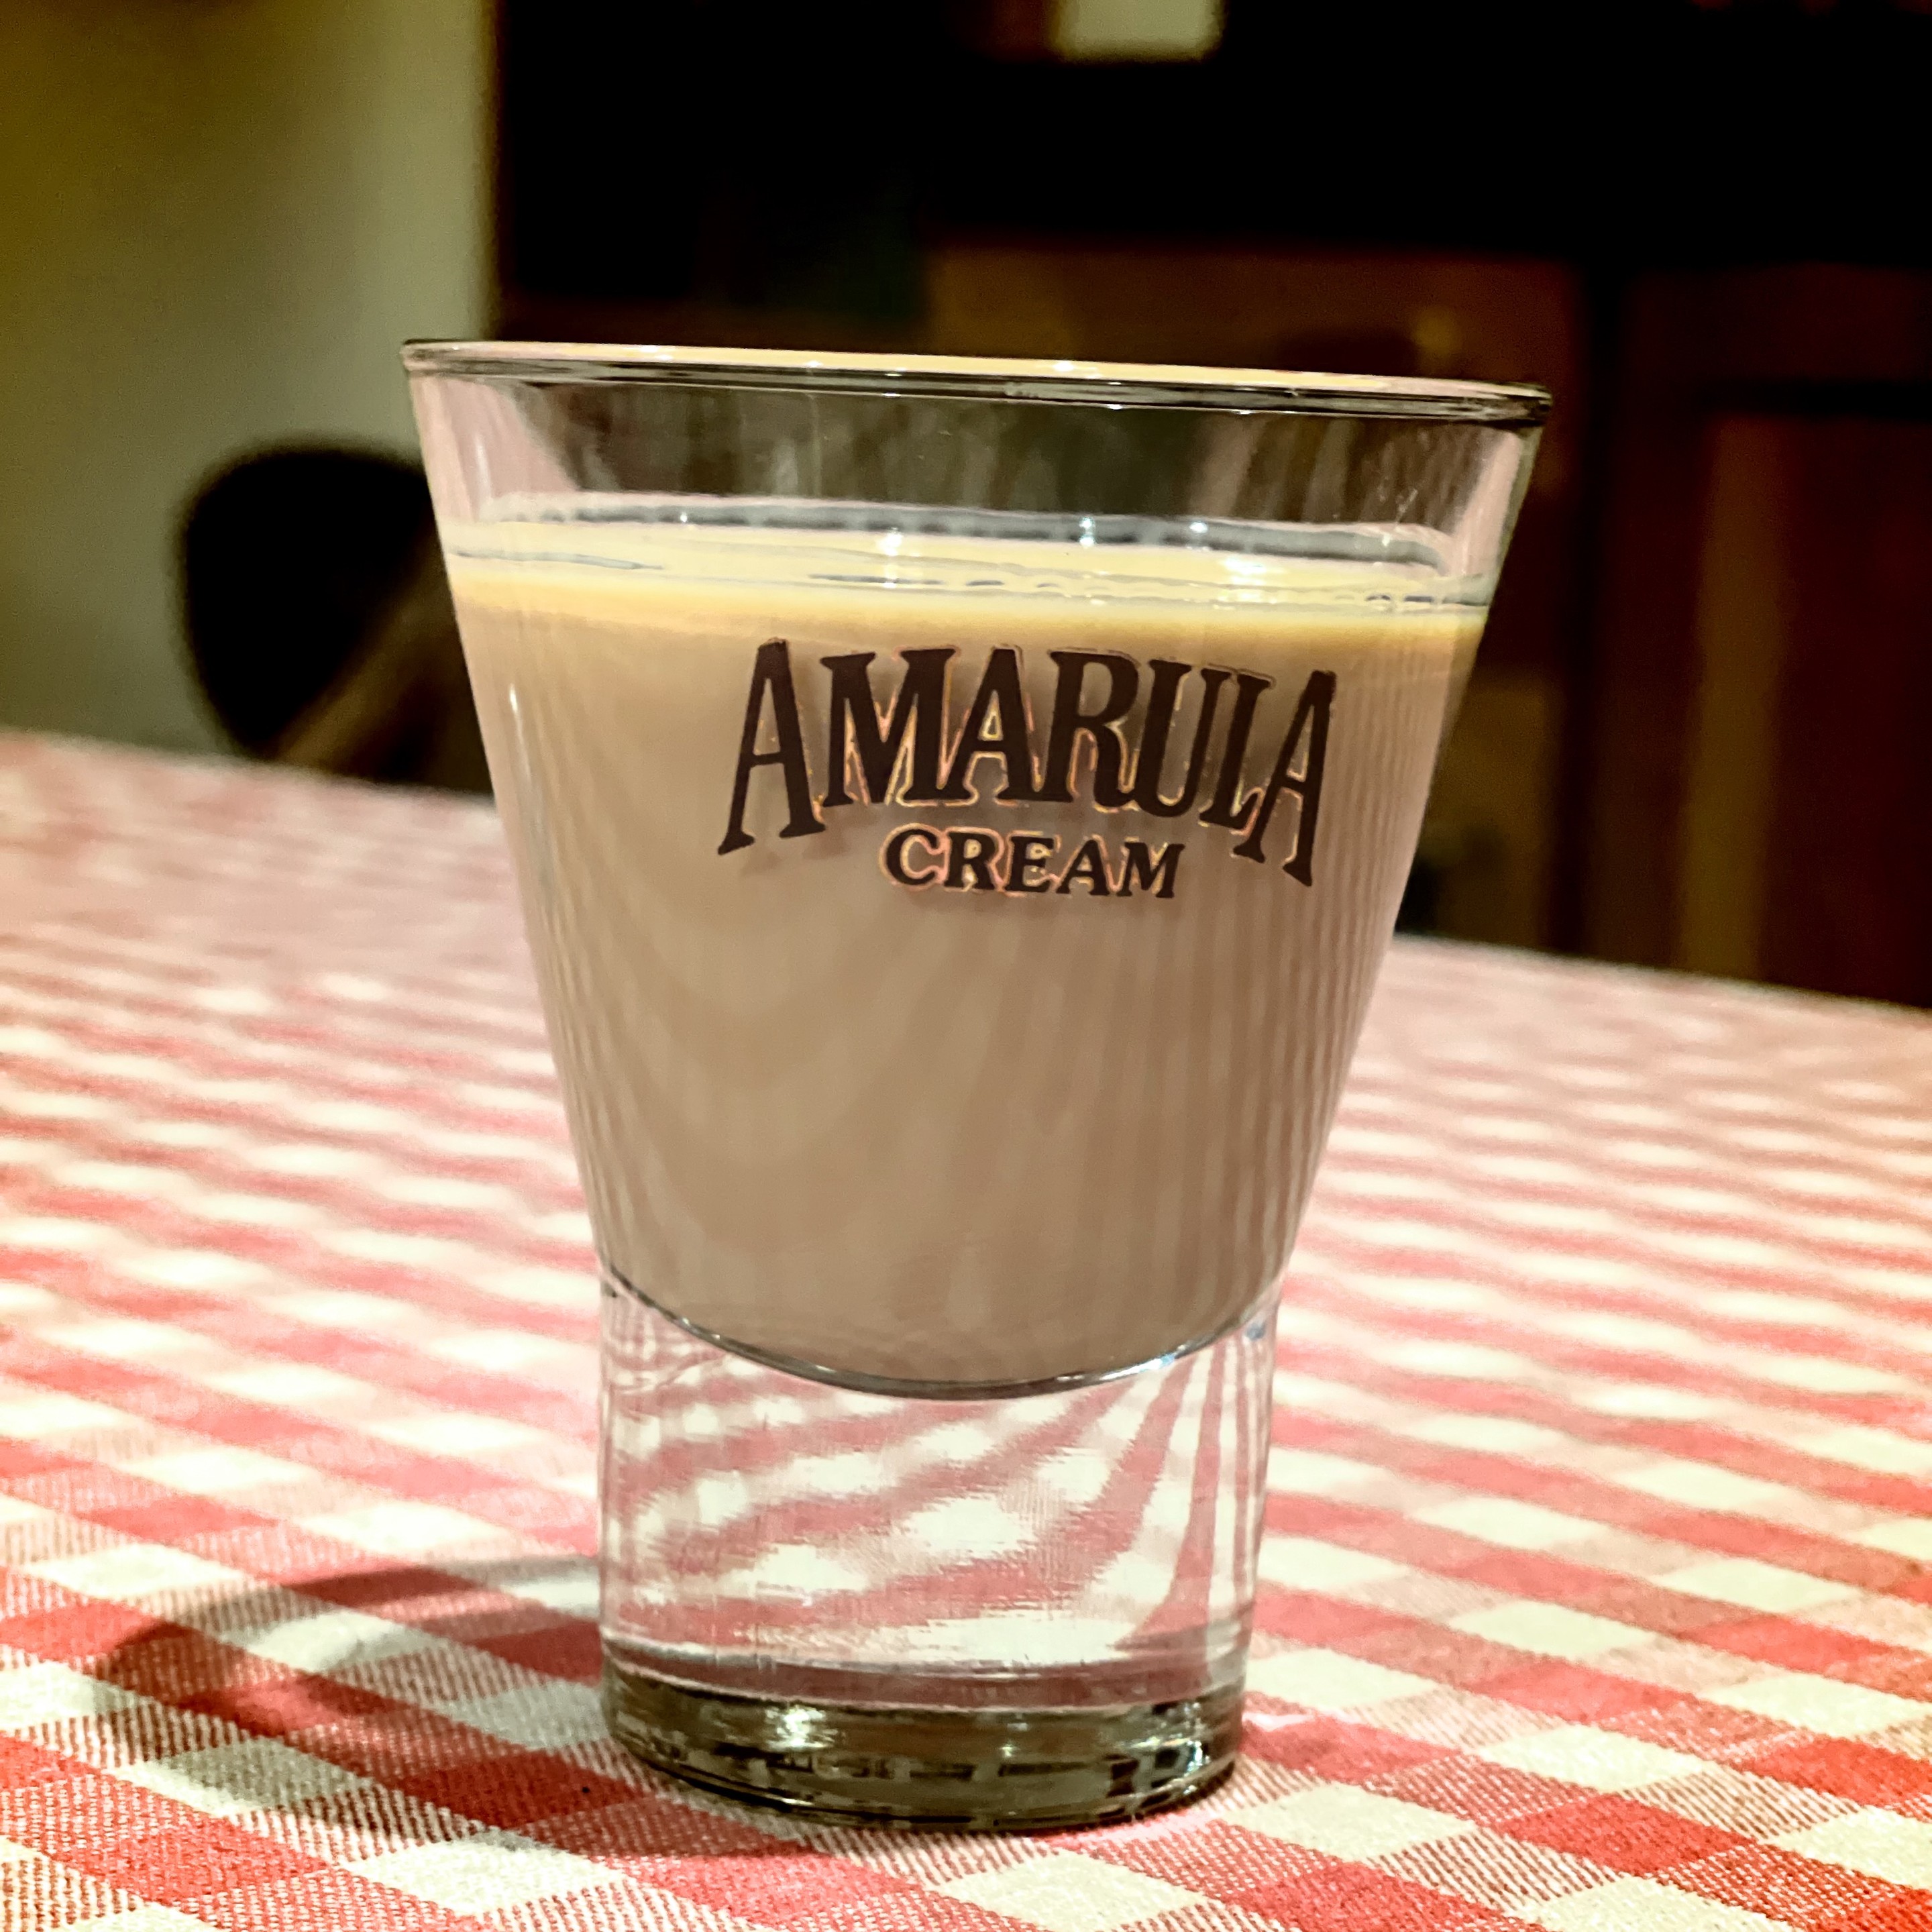 A glass of Amarula Cream liqueur on a checkered tablecloth.